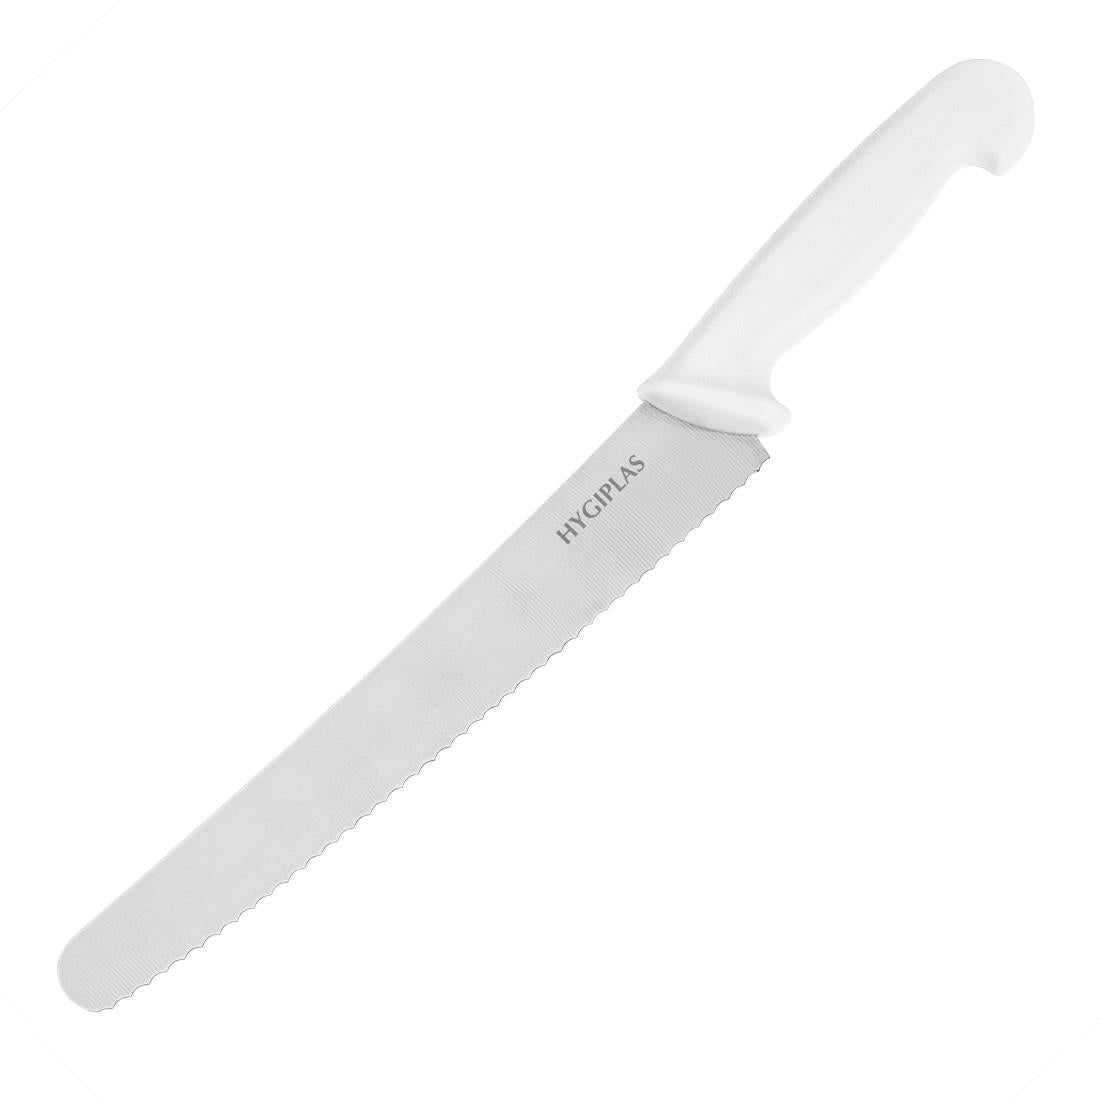 FX127 Hygiplas Serrated Pastry Knife White 25.4cm JD Catering Equipment Solutions Ltd